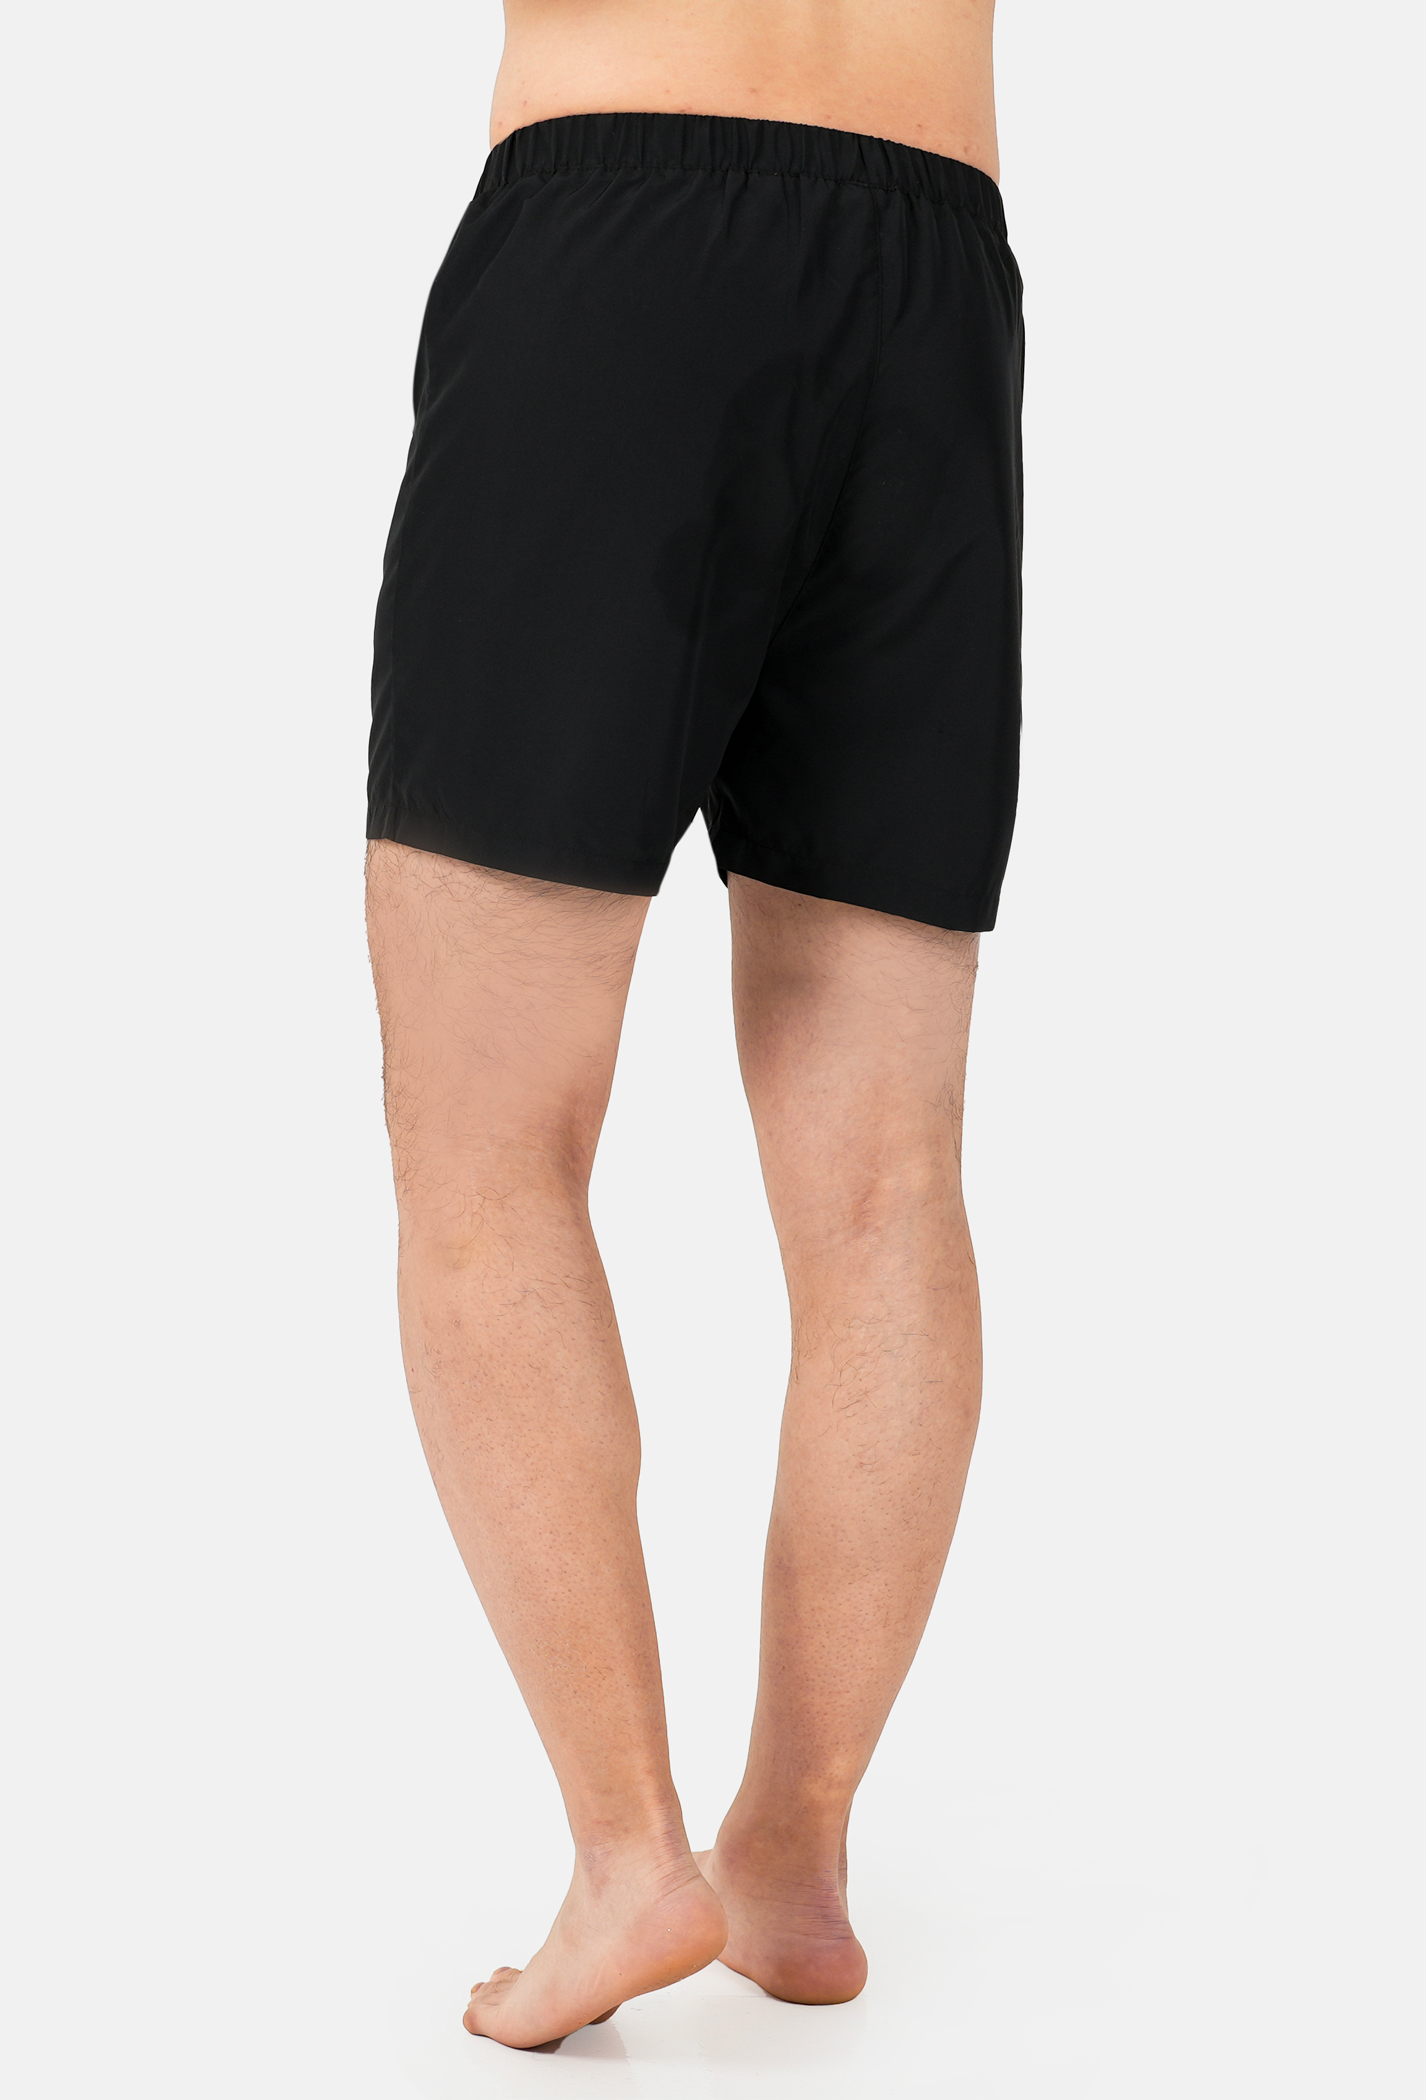 Quần Shorts mặc nhà Coolmate Basics den 3